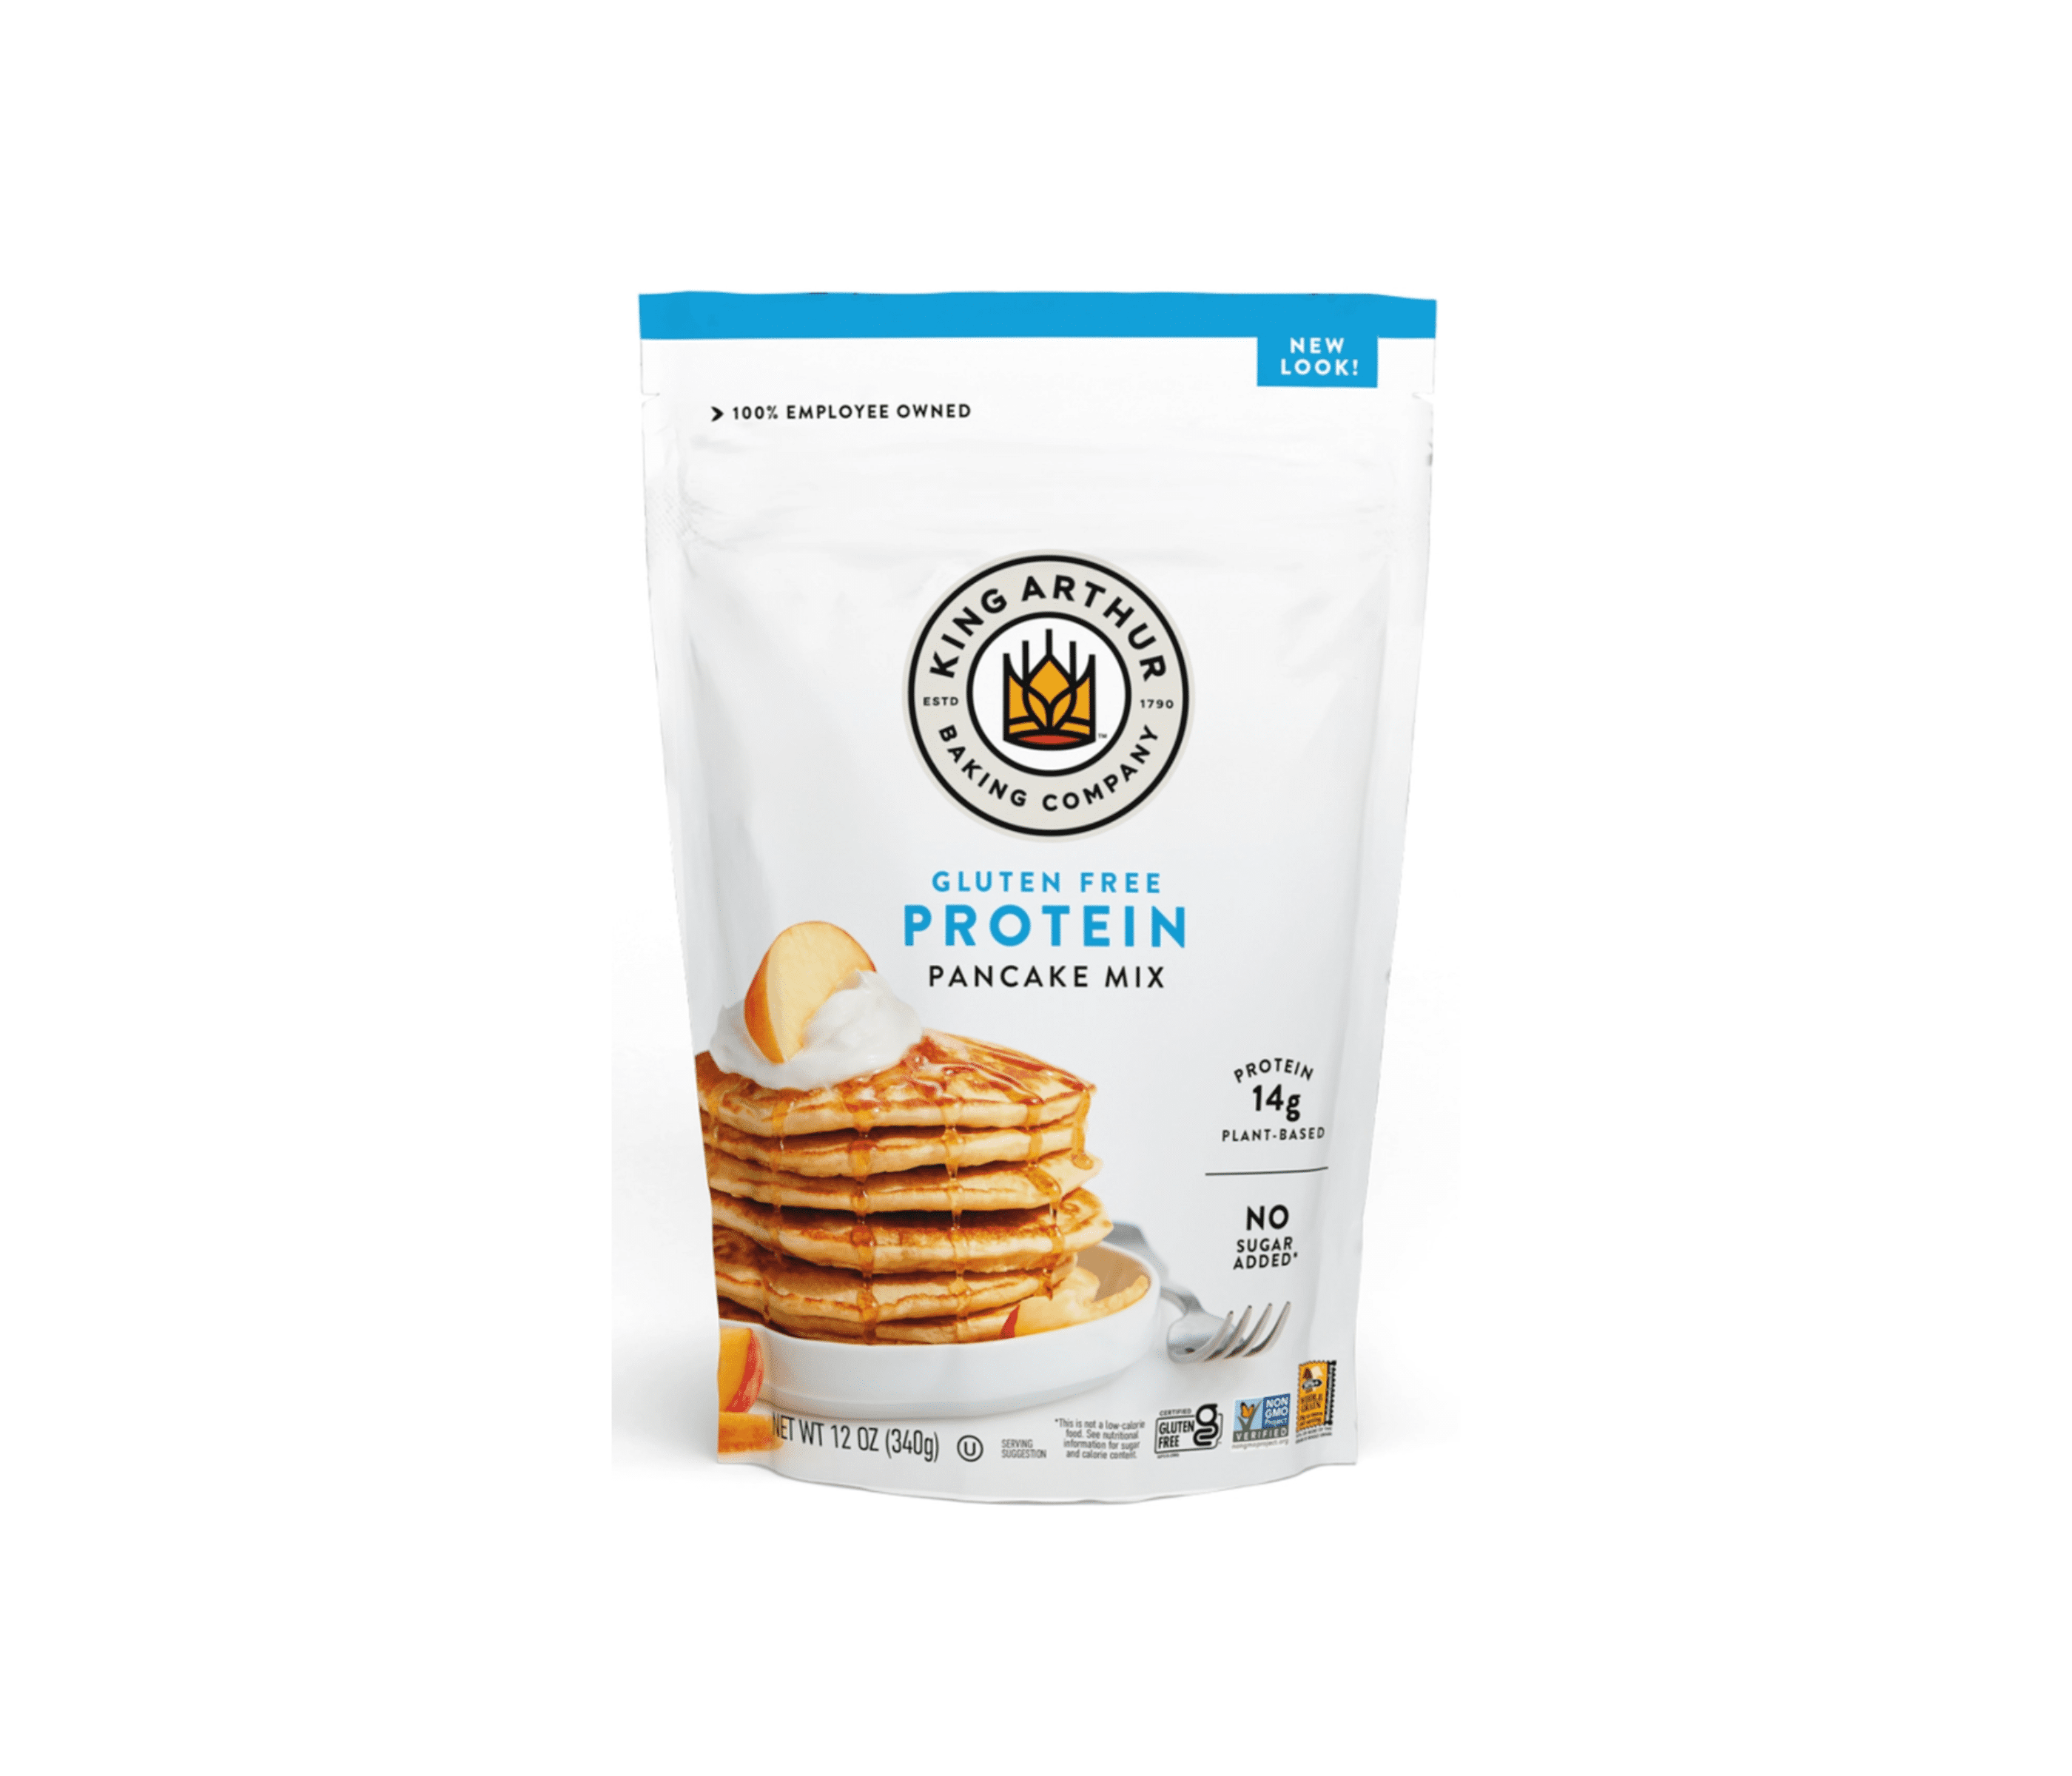 Protein Pancake Mix by King Baking Company - GTFO It's Vegan